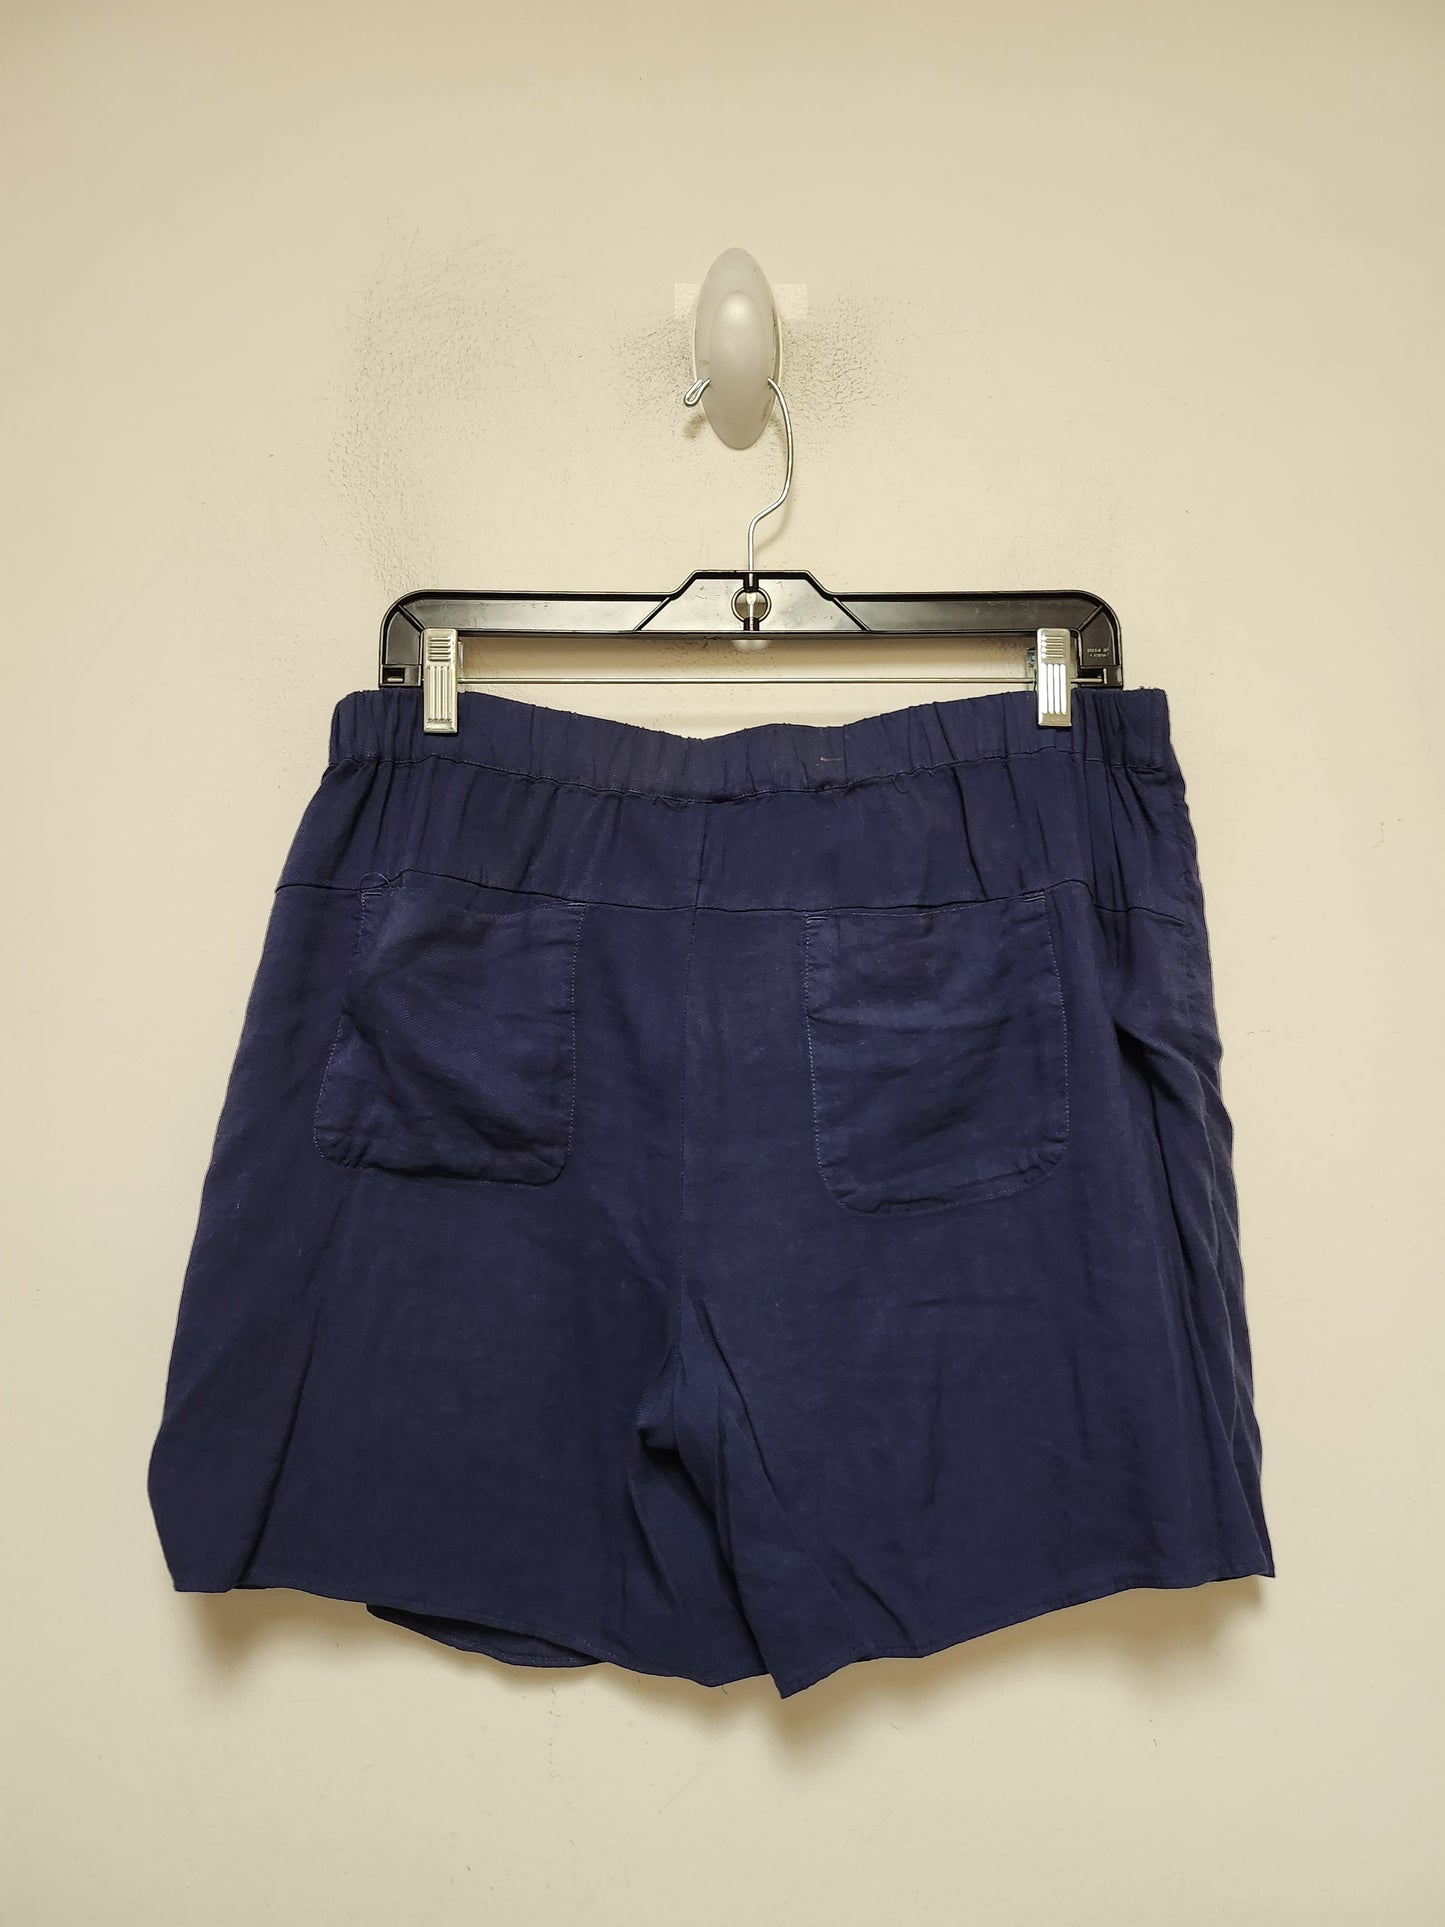 Navy Shorts Clothes Mentor, Size 6